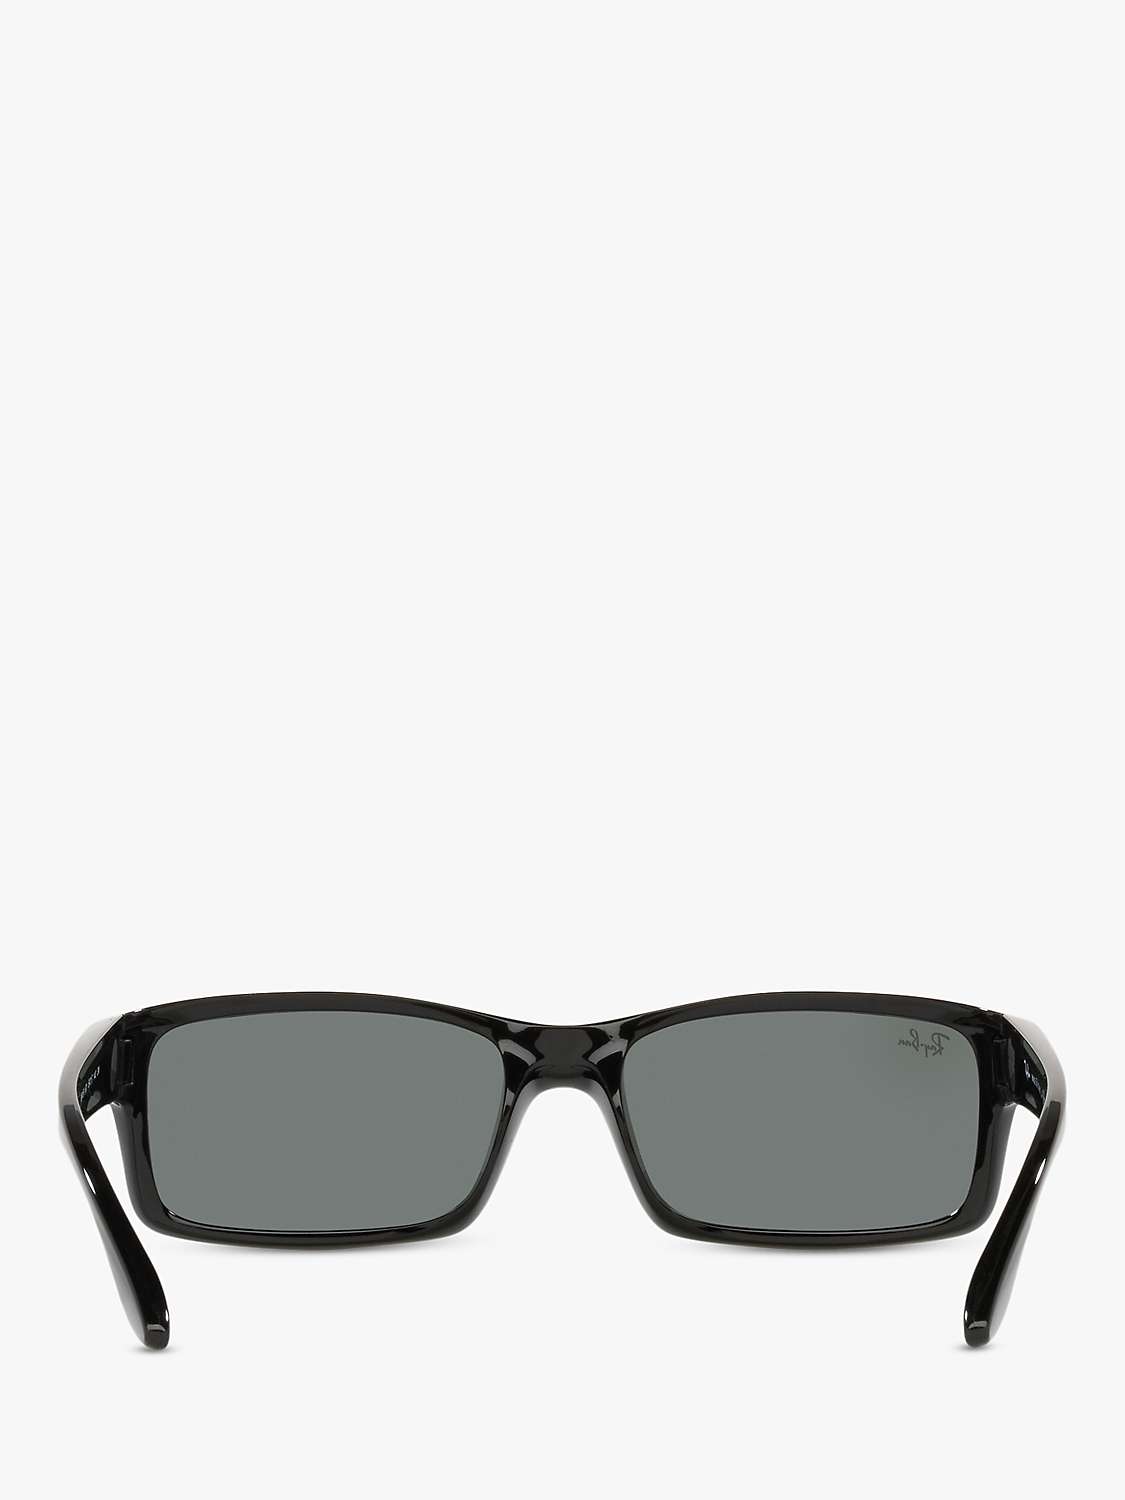 Buy Ray-Ban RB4151 Men's Rectangular Sunglasses Online at johnlewis.com